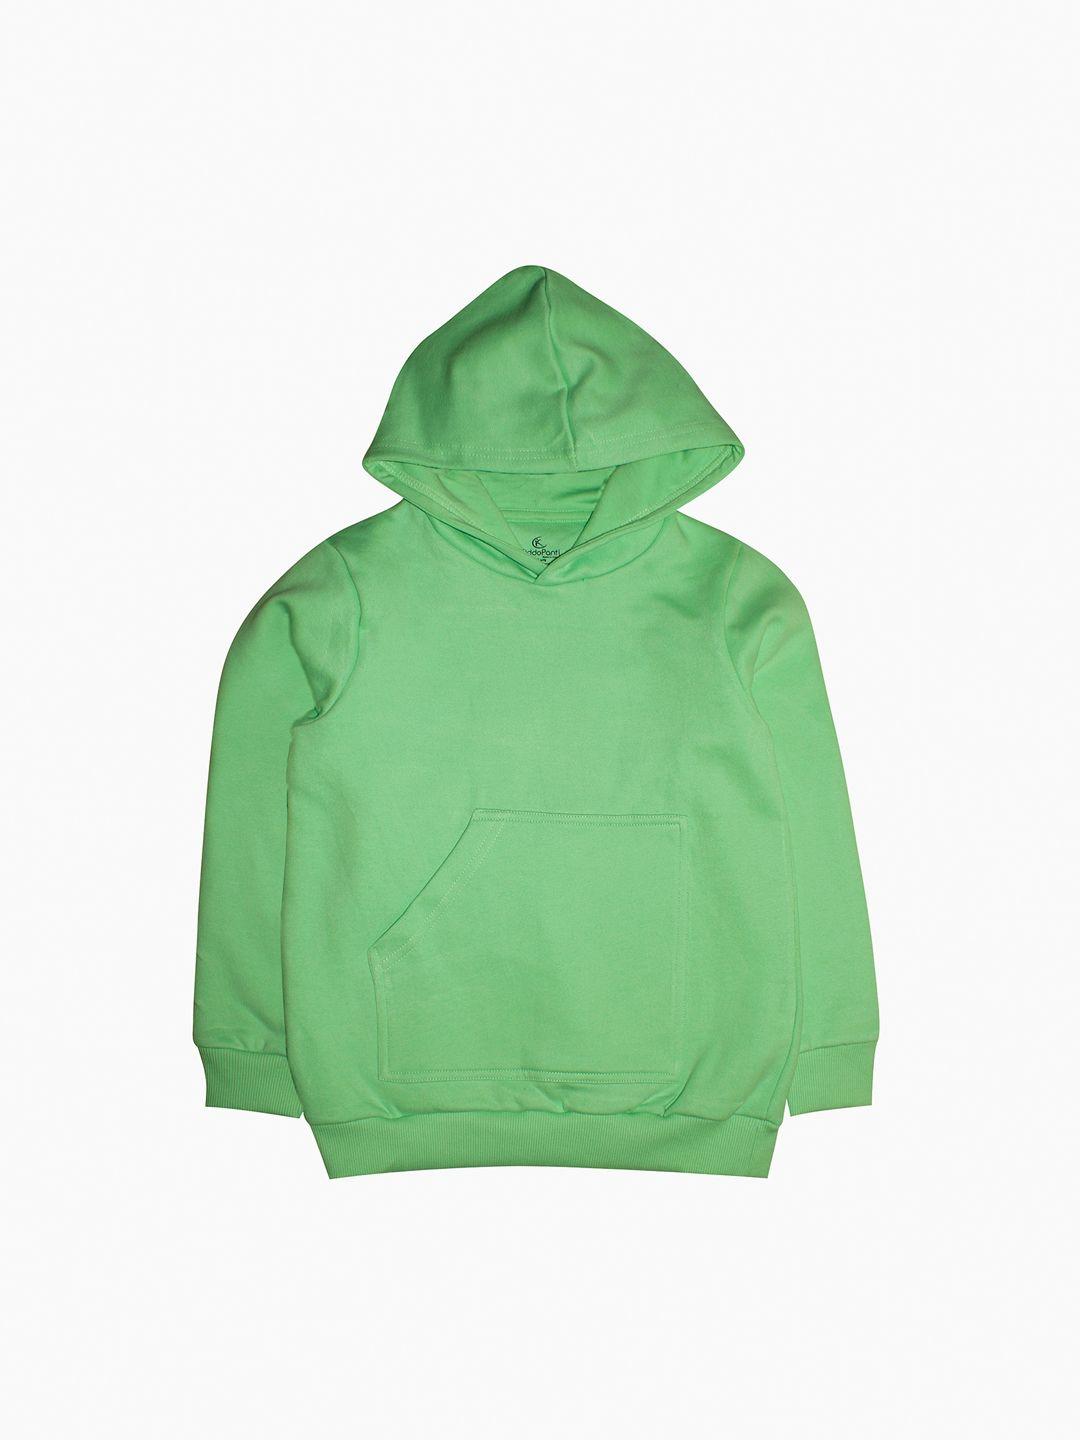 kiddopanti unisex kids green hooded sweatshirt